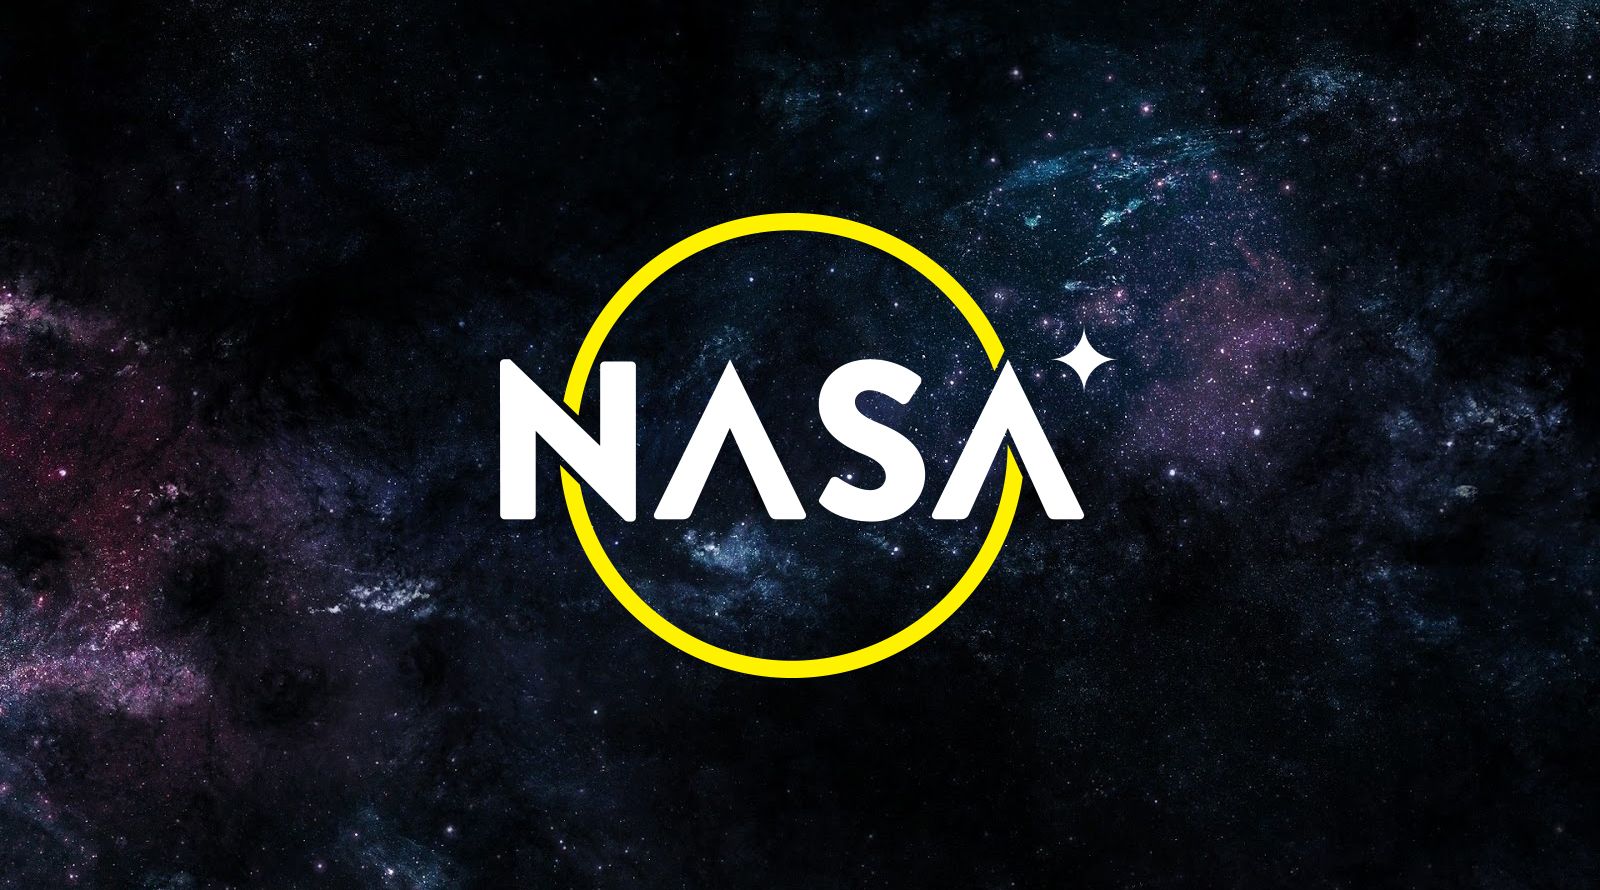 Nasa logo concept on space background